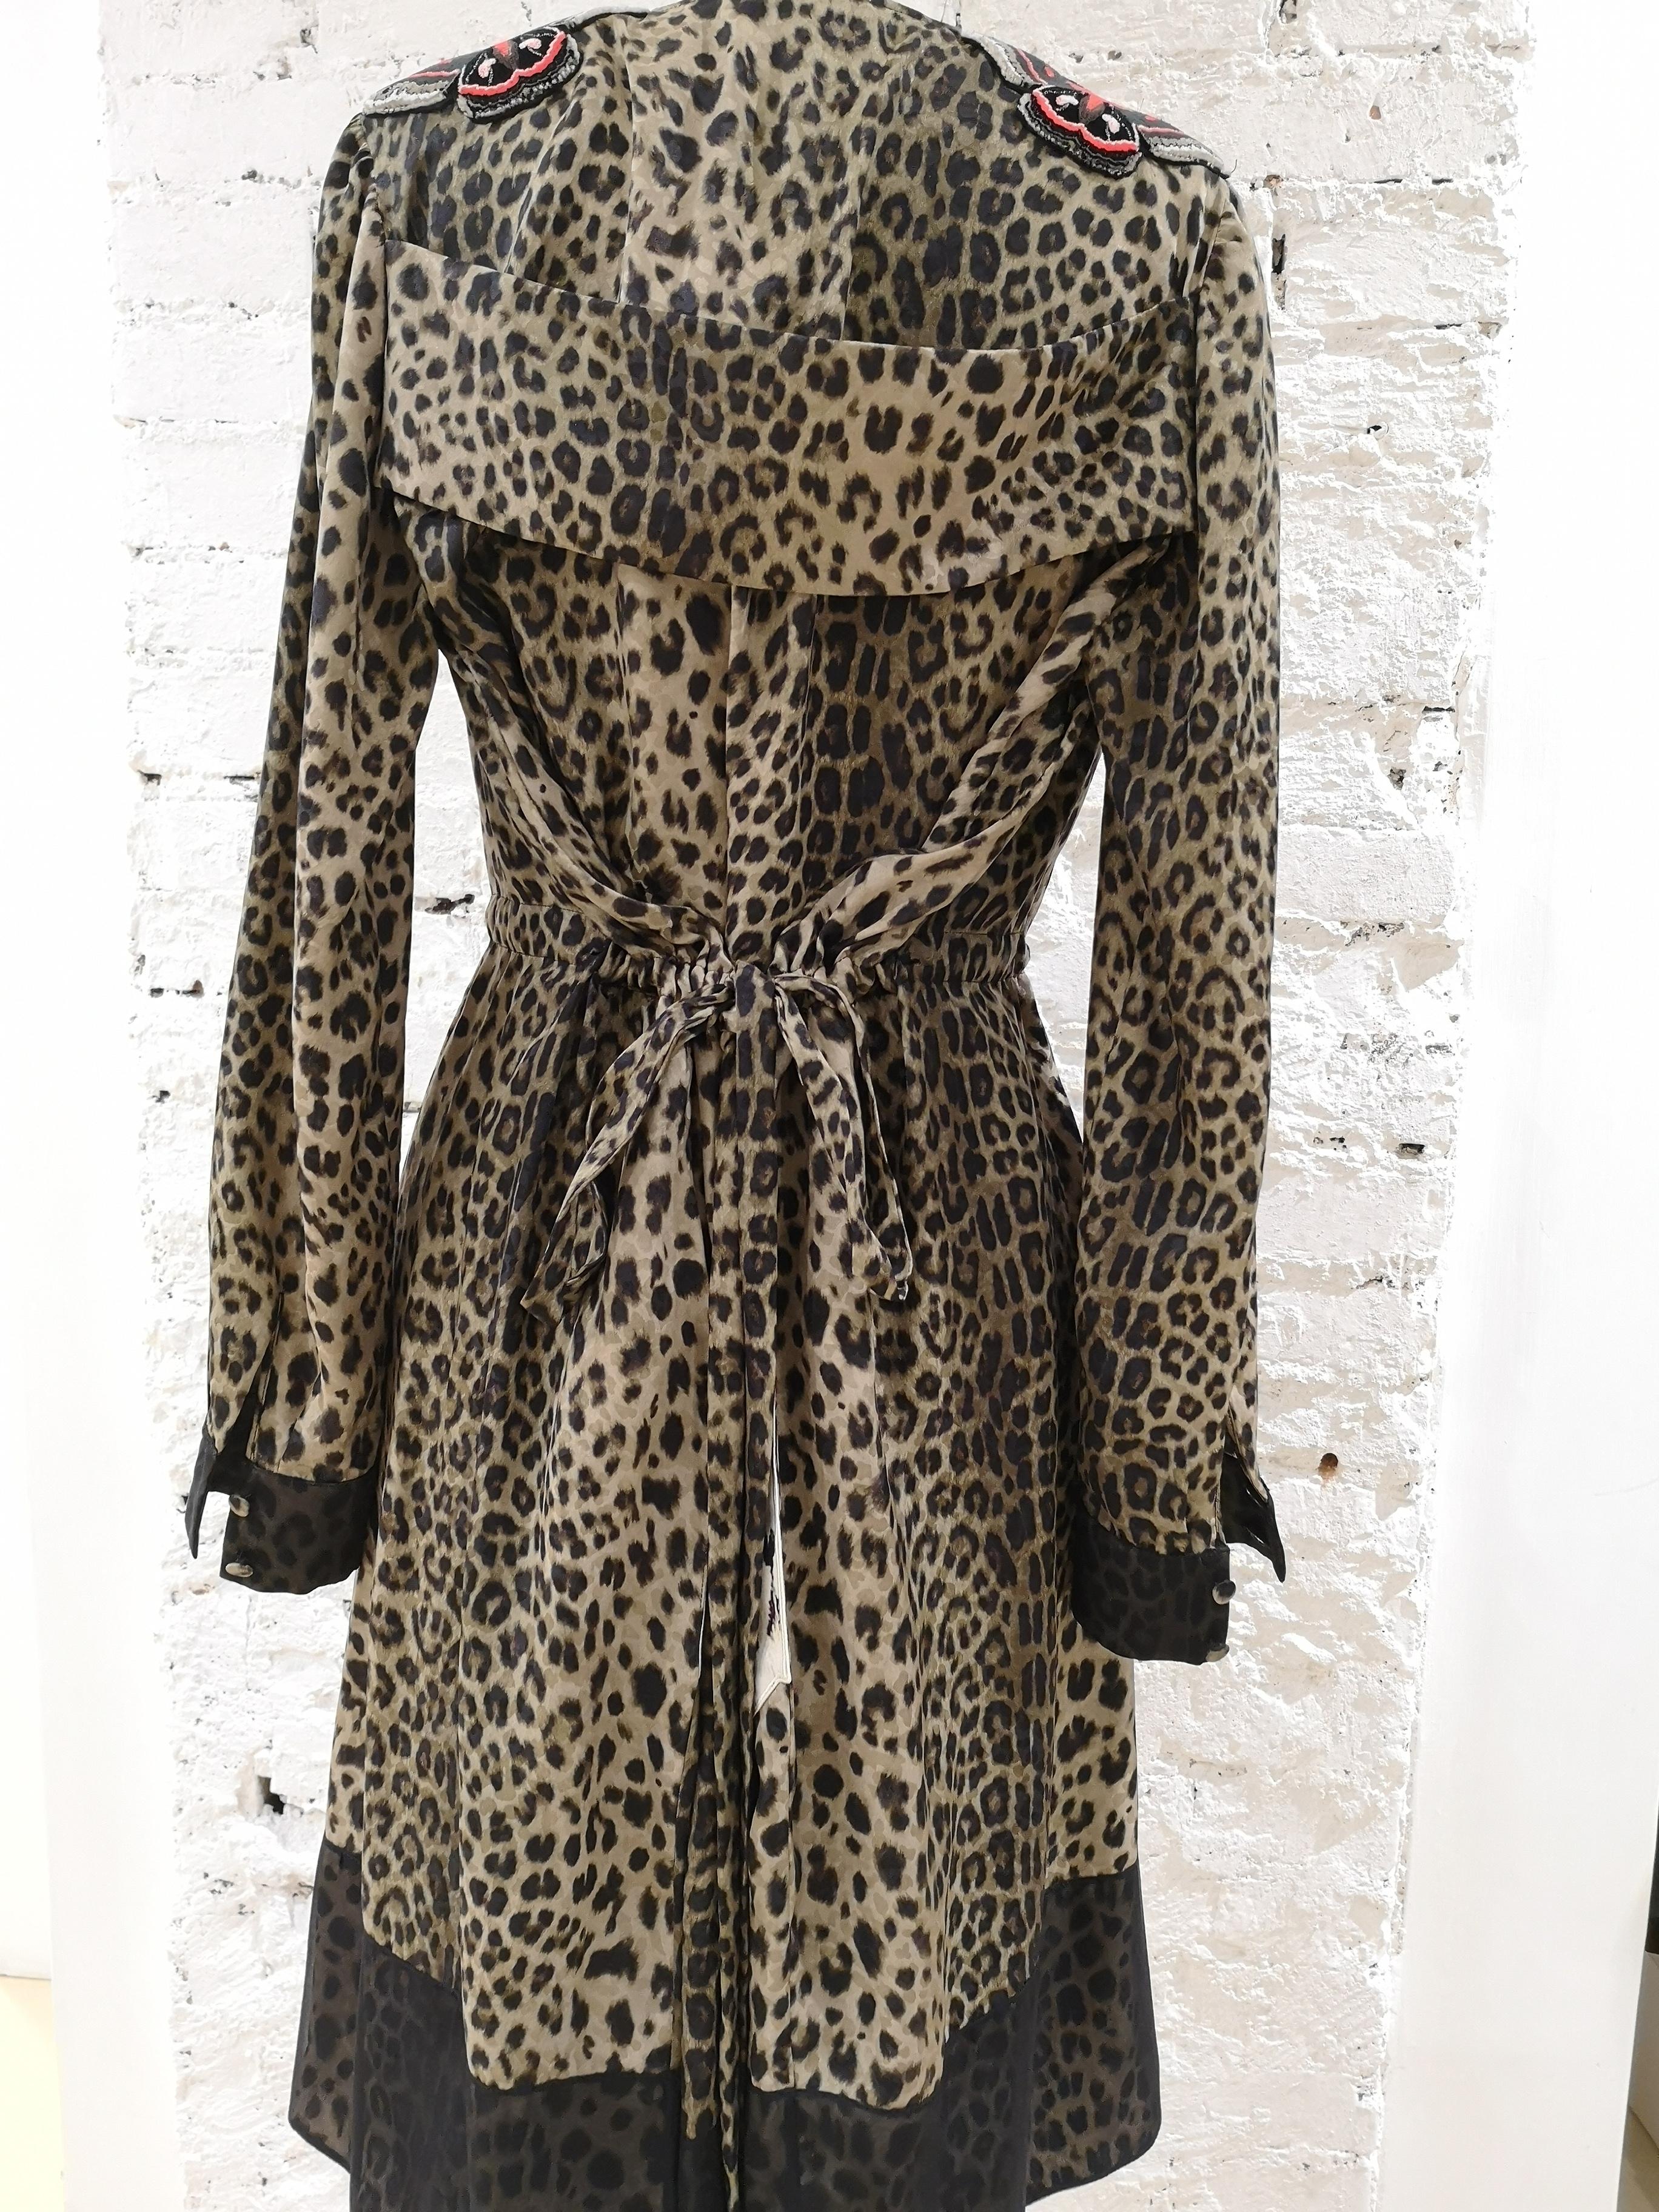 Givenchy Leopard Butterfly Dress 4